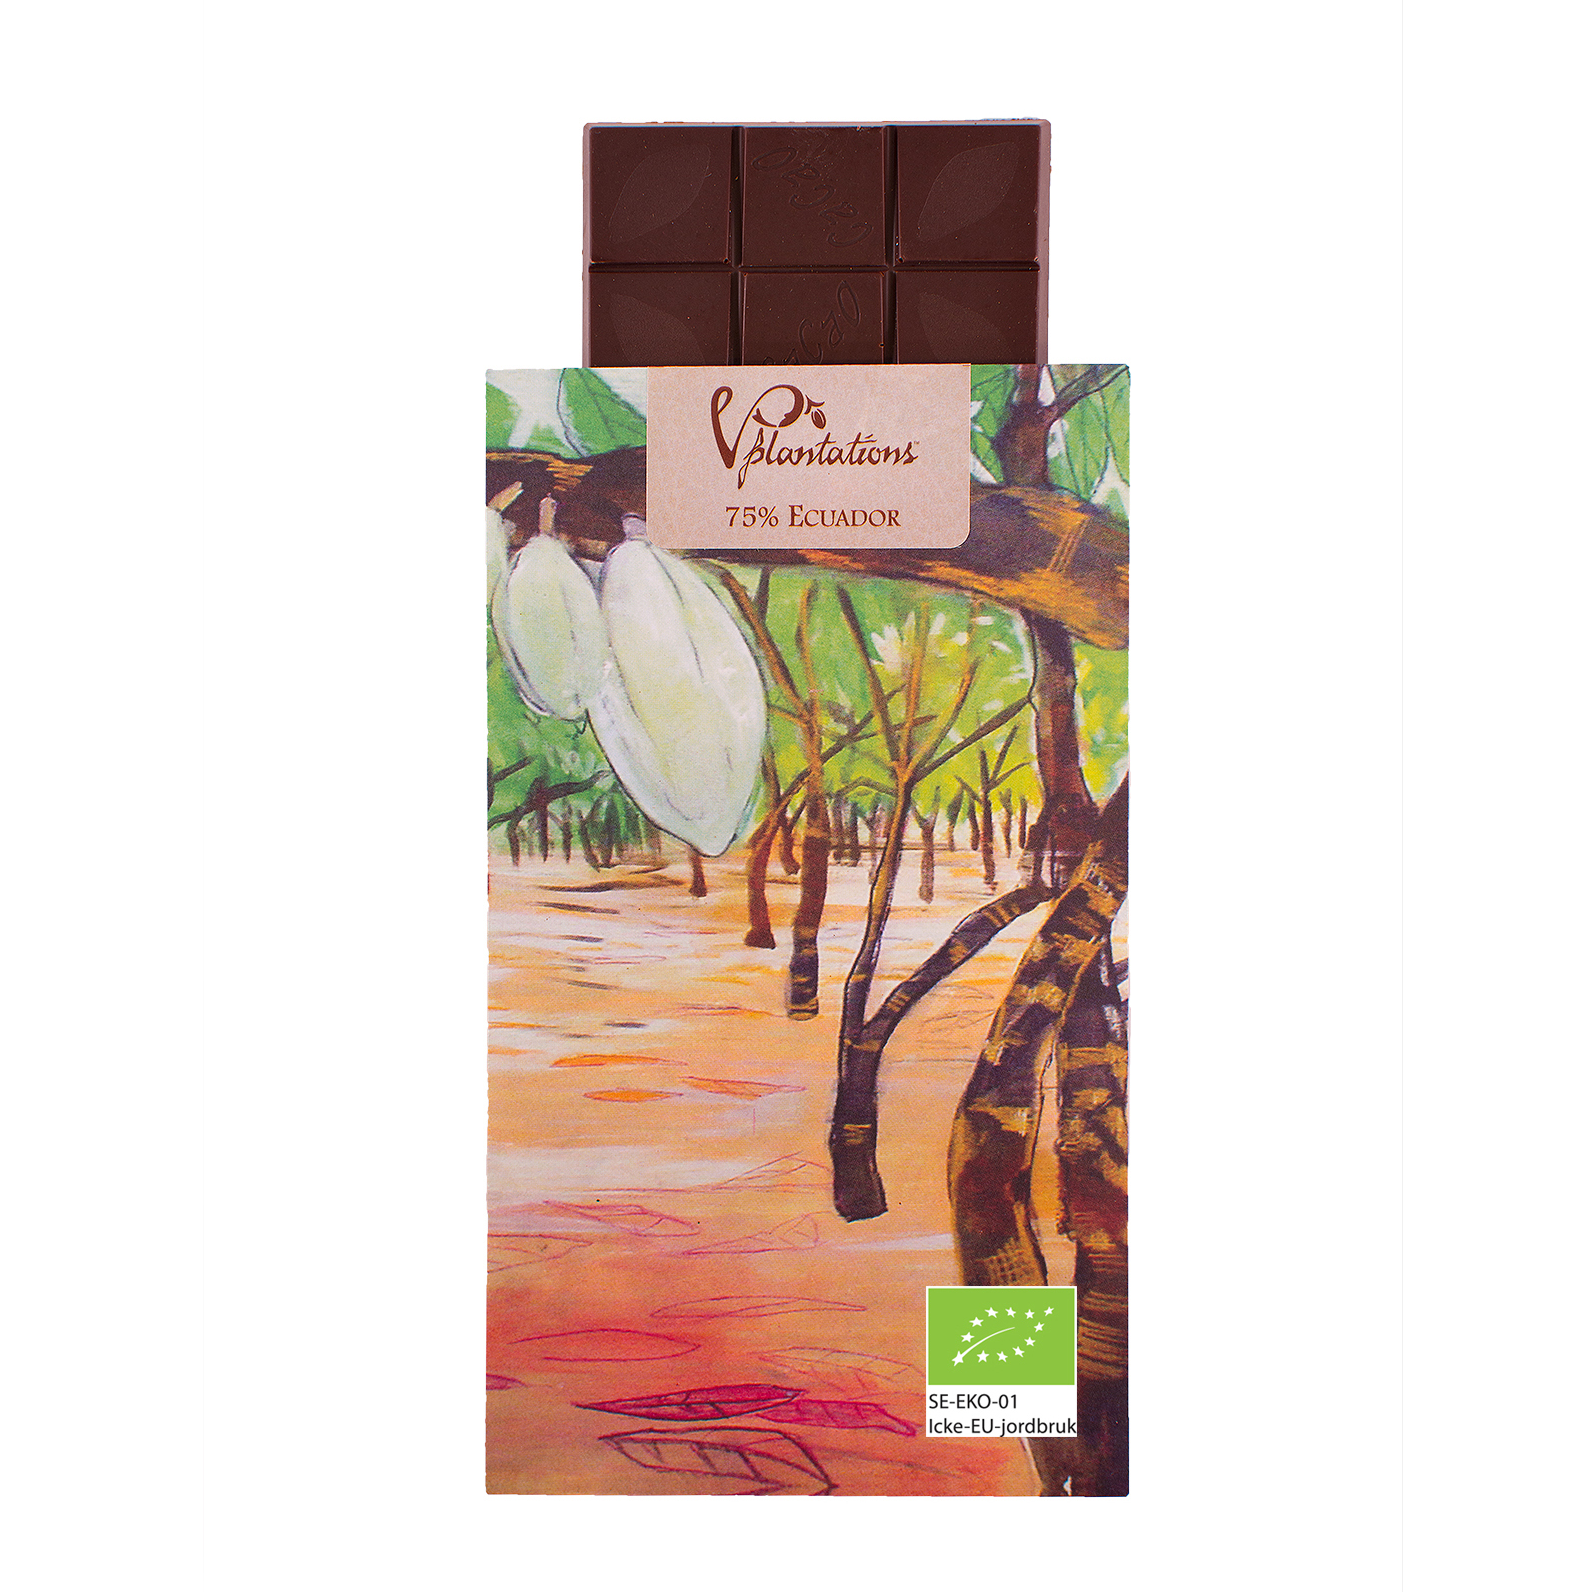 's Ecuador Choklad 75% Kakaohalt'